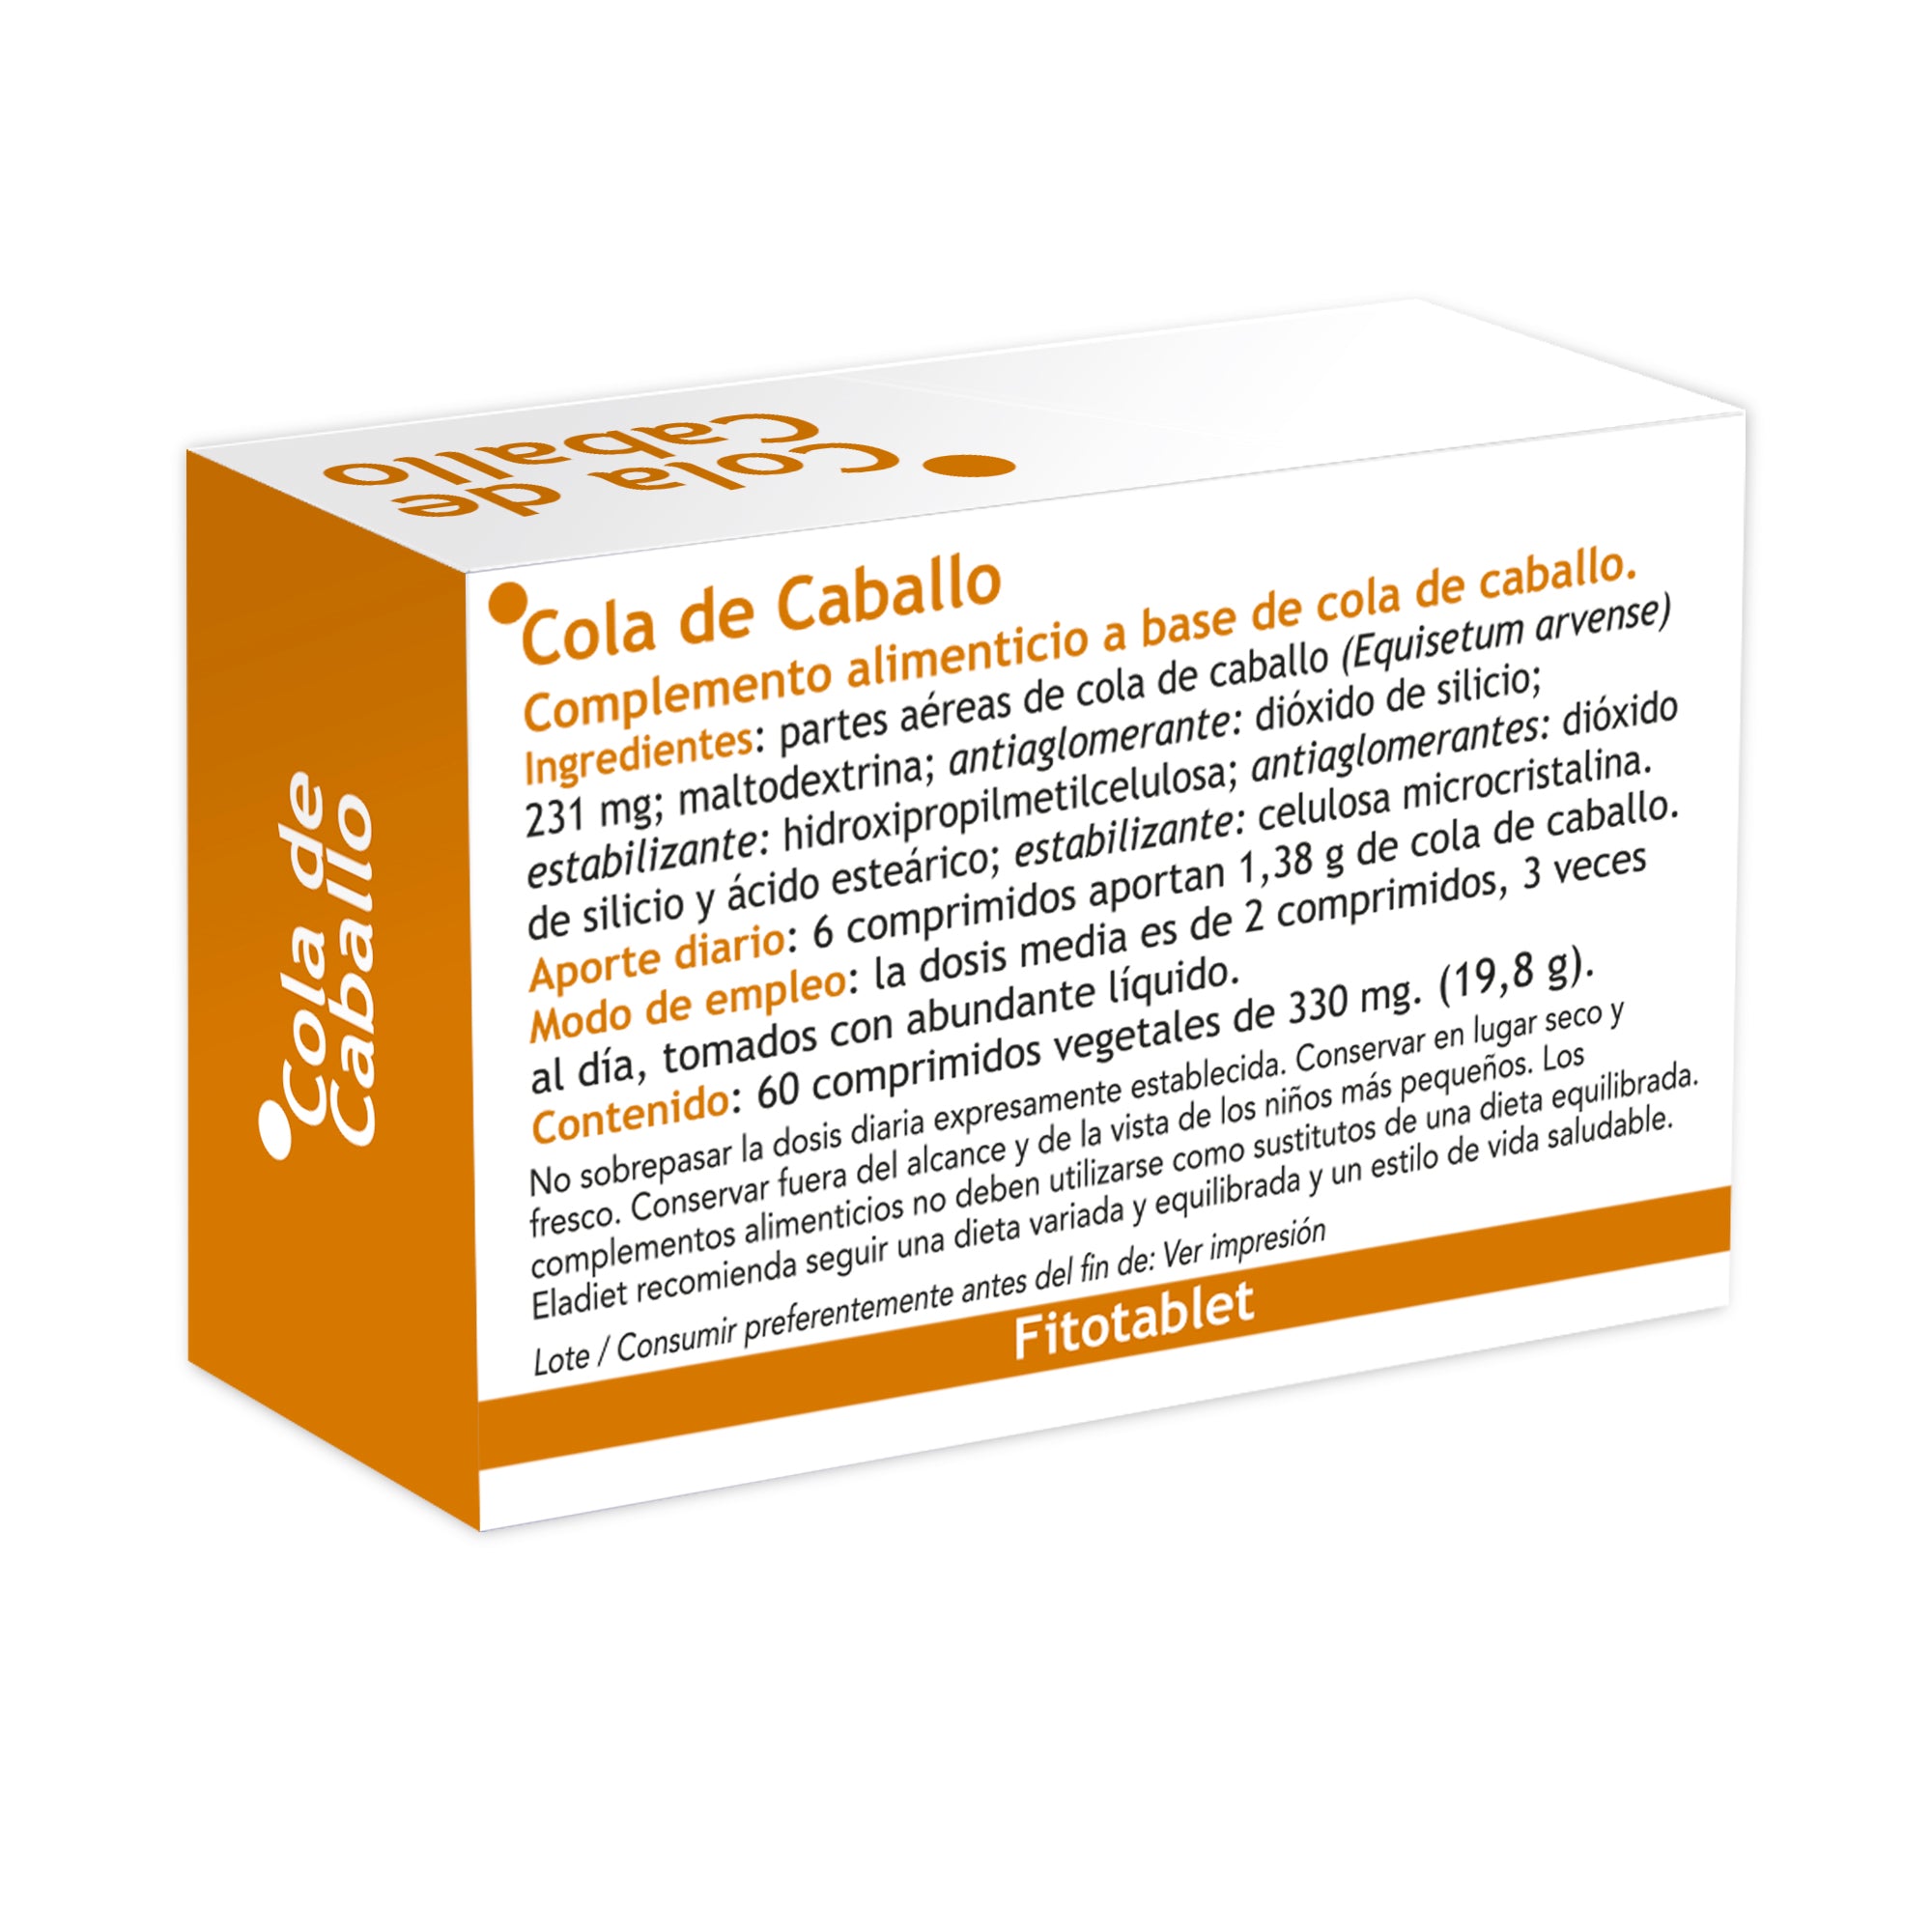 Eladiet - Fitotablet Cola Caballo 330Mg 60 Comprimidos - Biopharmacia, Parafarmacia online